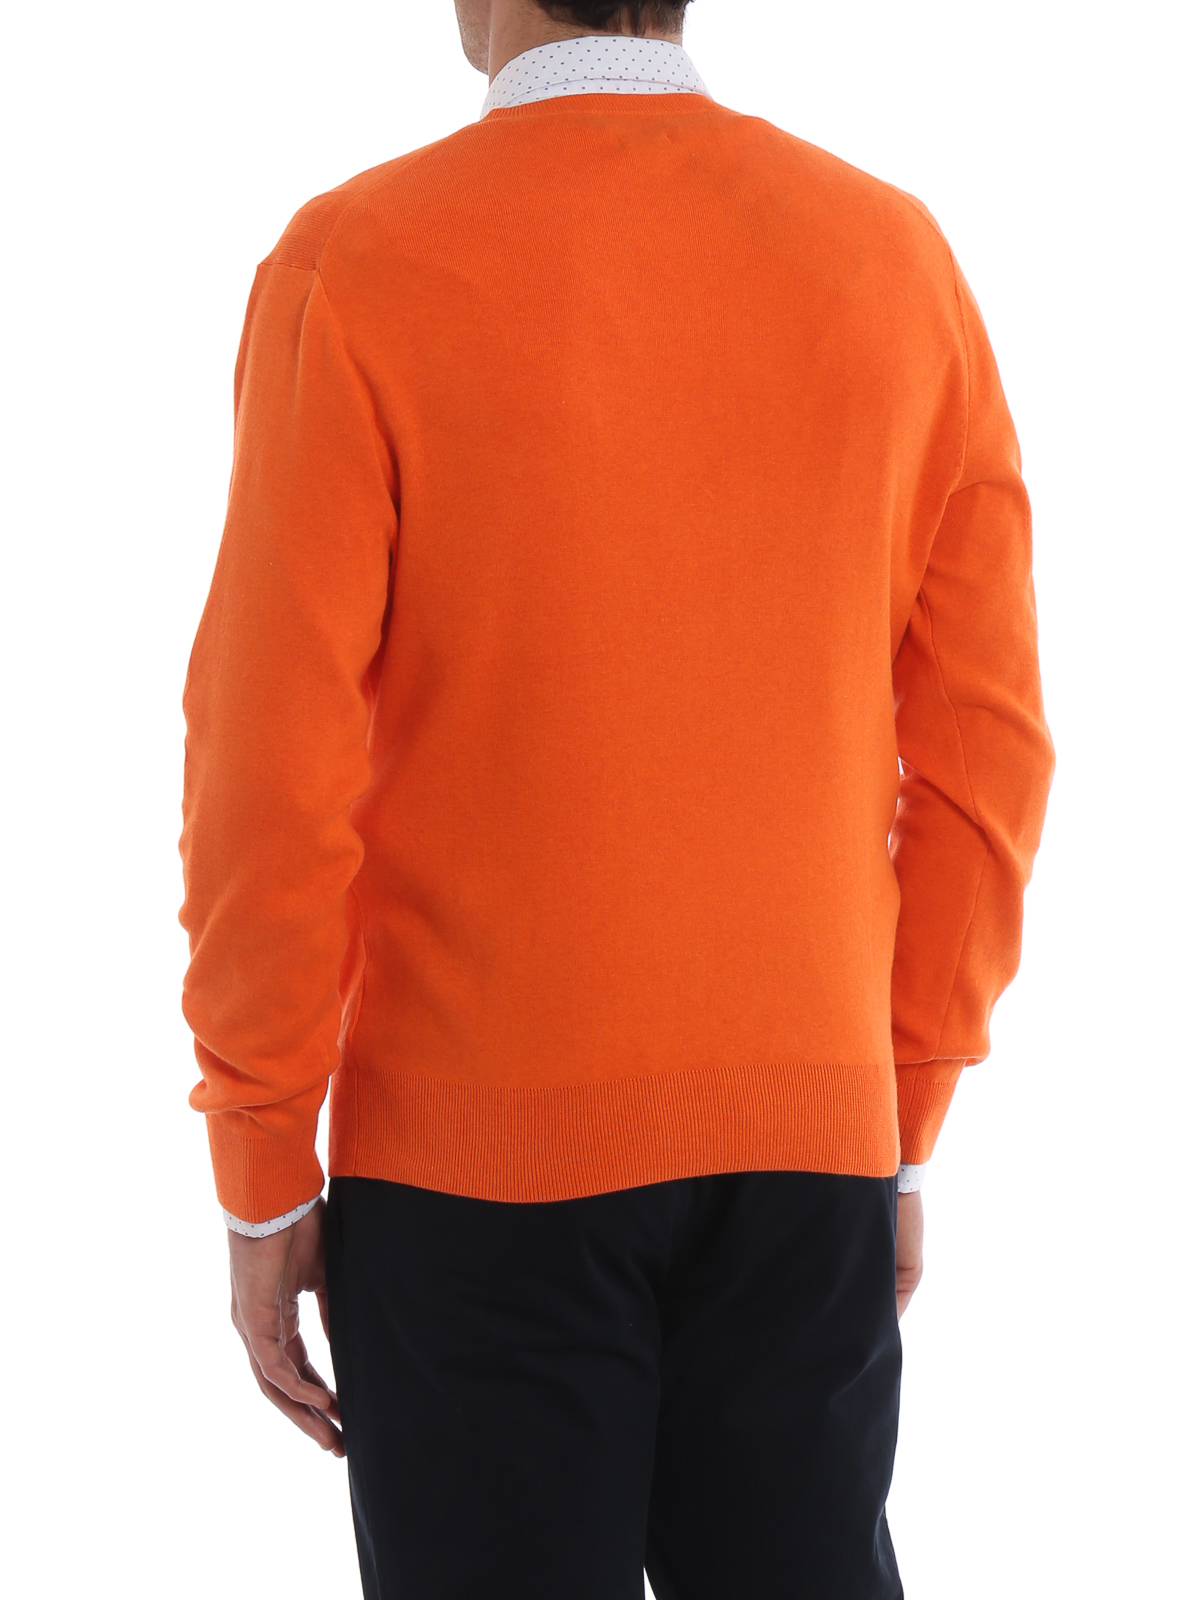 V-neck Lauren orange fit sweater - V Ralph necks - Slim A40S4602C4782 Polo cotton